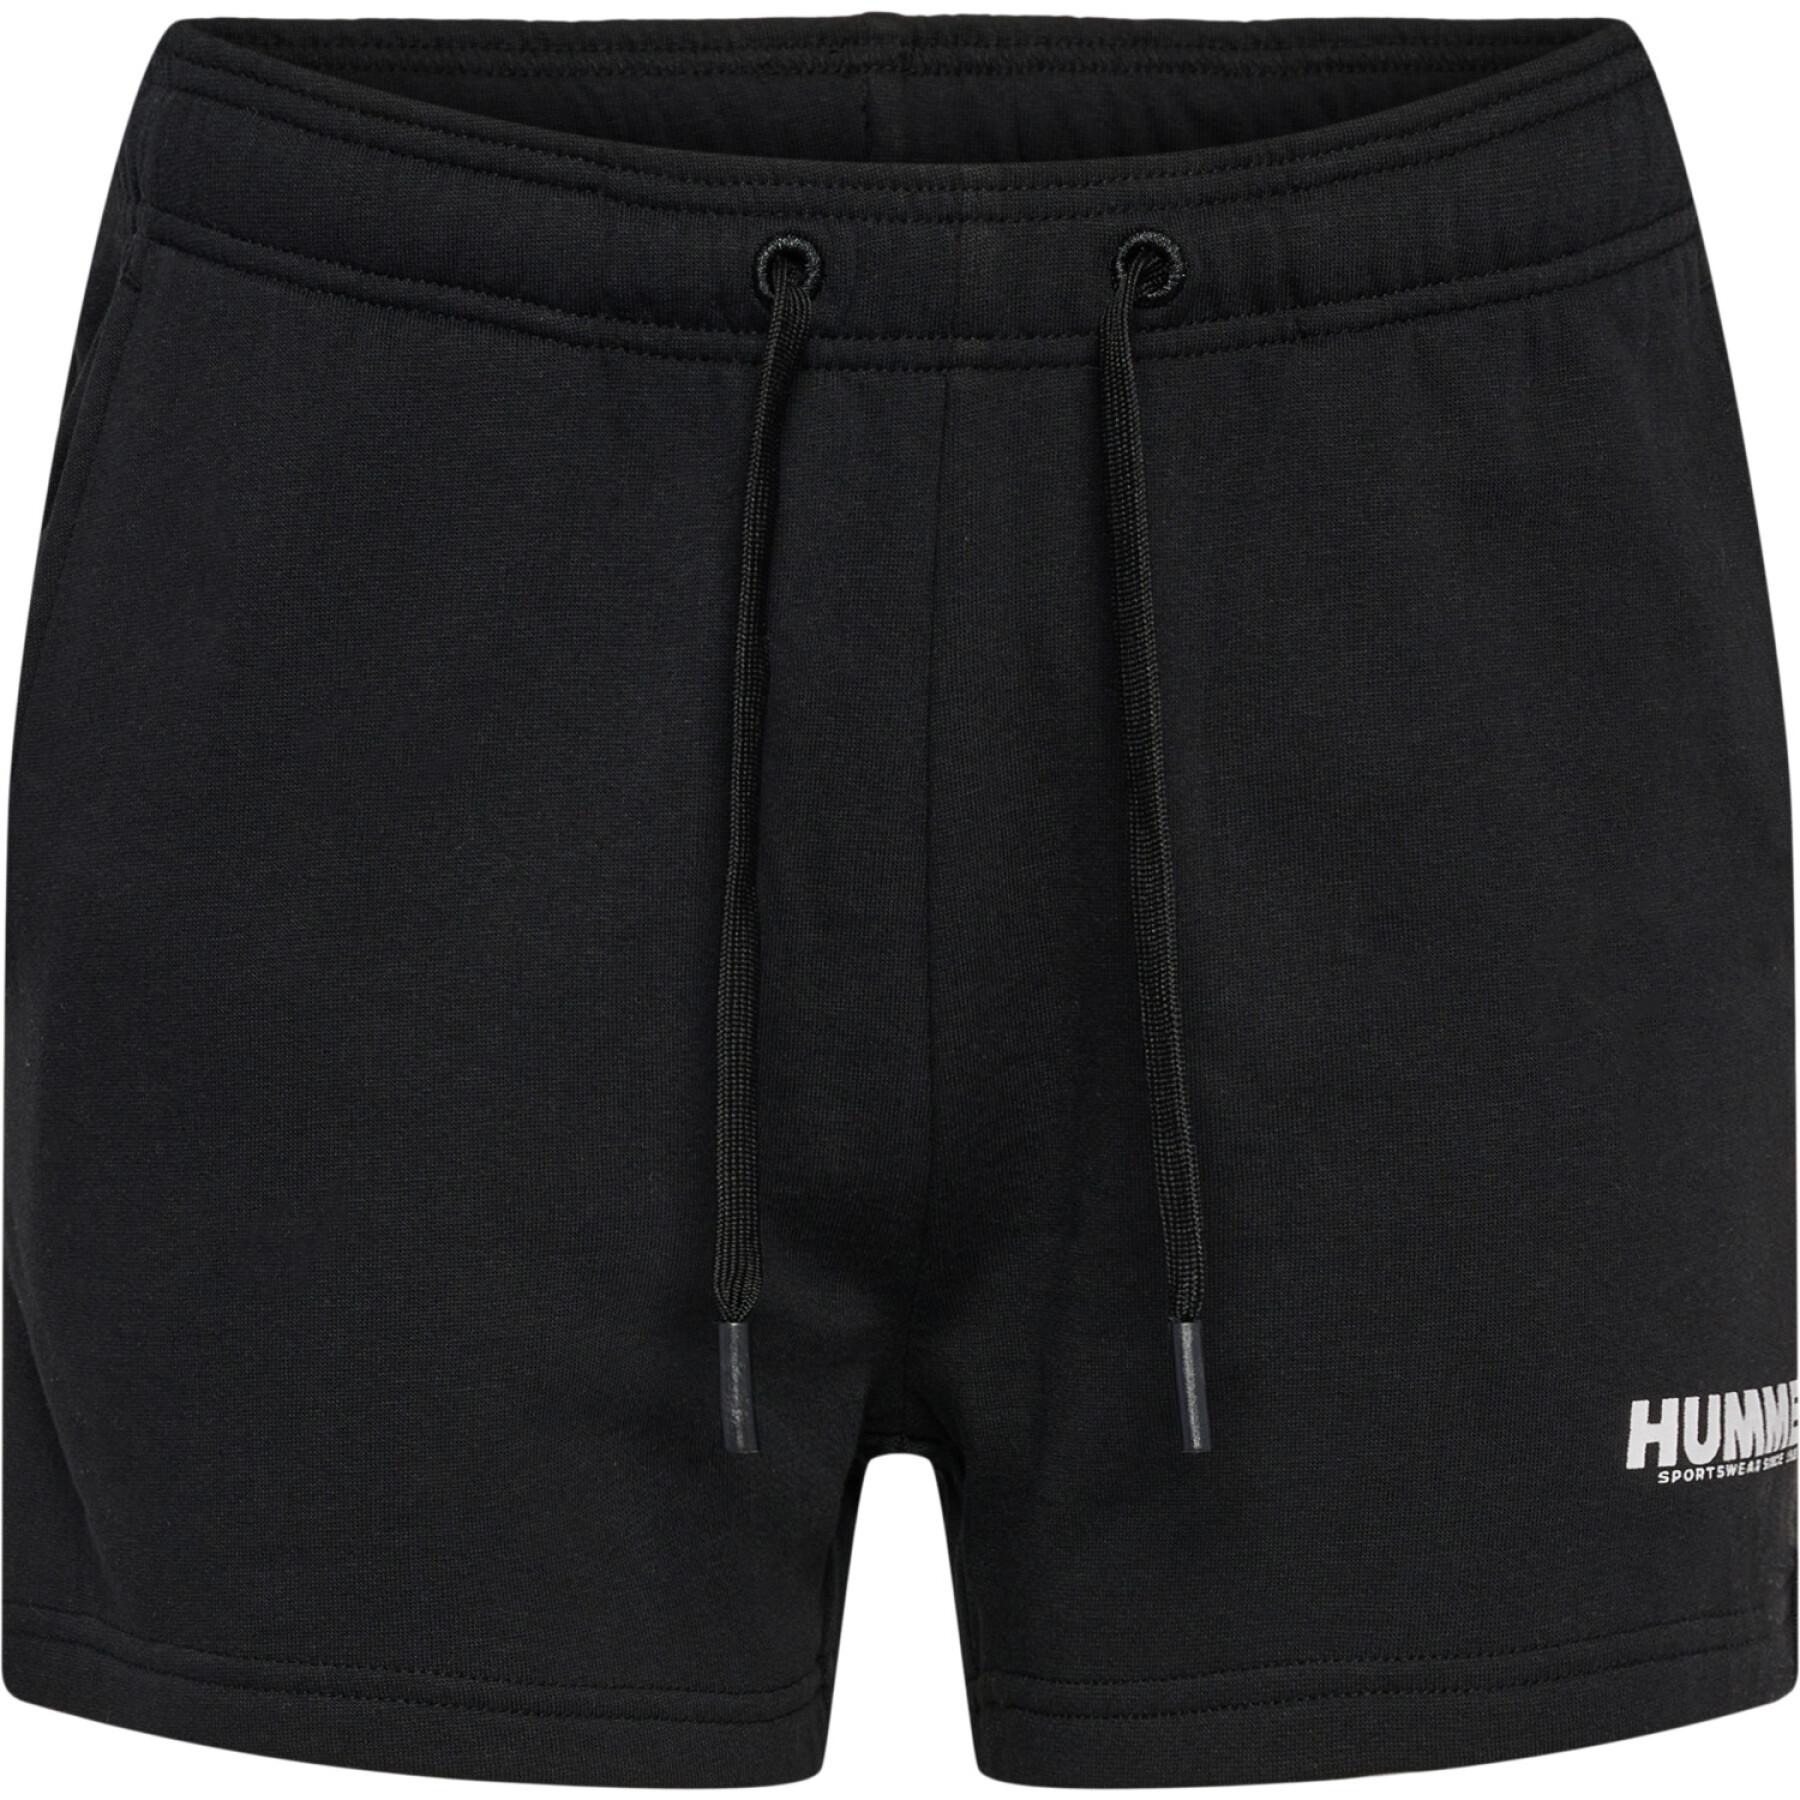 - Hummel - Lifestyle Women\'s Hummel Brands - Legacy shorts